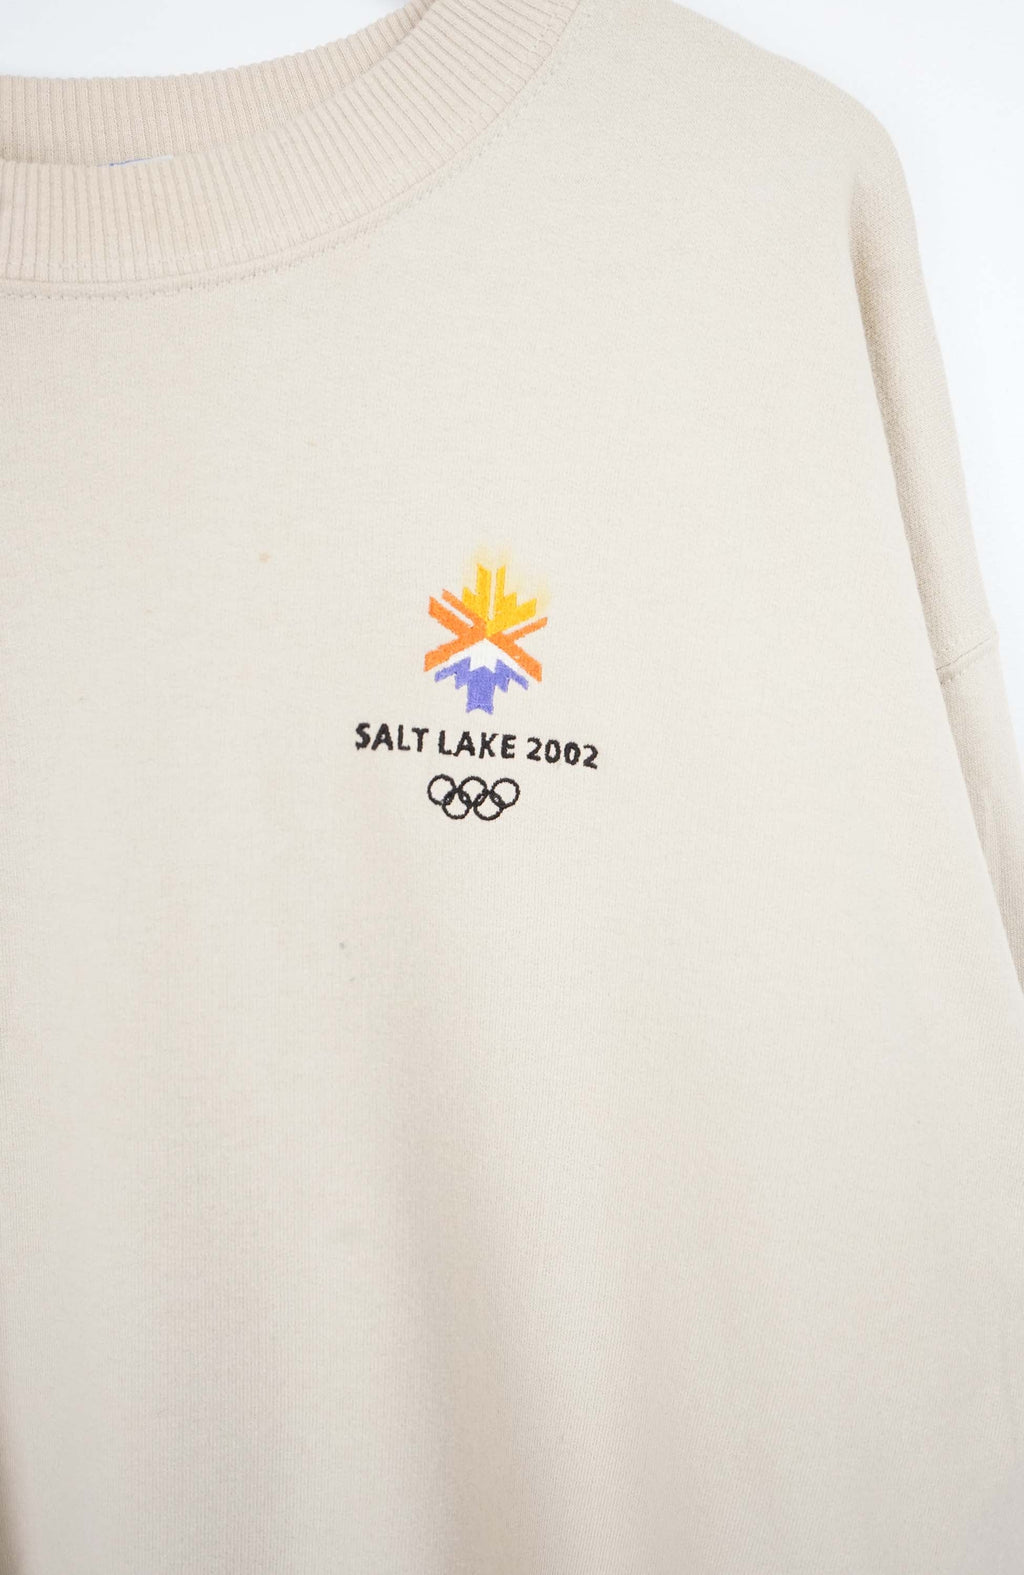 VINTAGE SALT LAKE CITY OLYMPICS 2002 SWEATER (L)